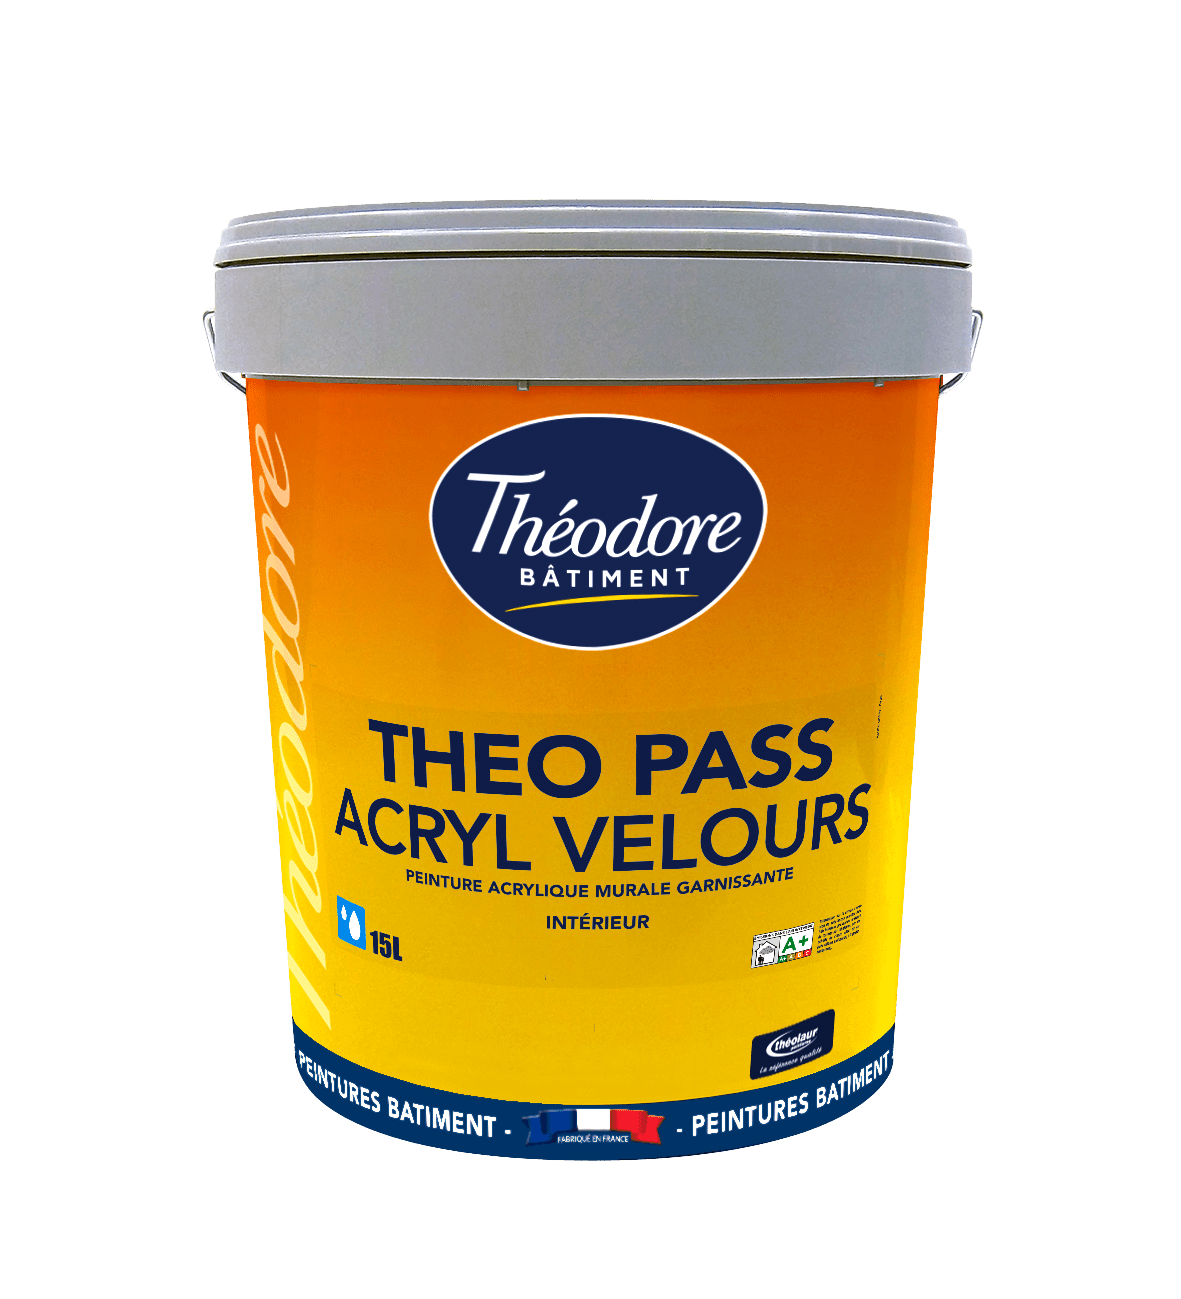 Theo pass acryl velours 15l 0620